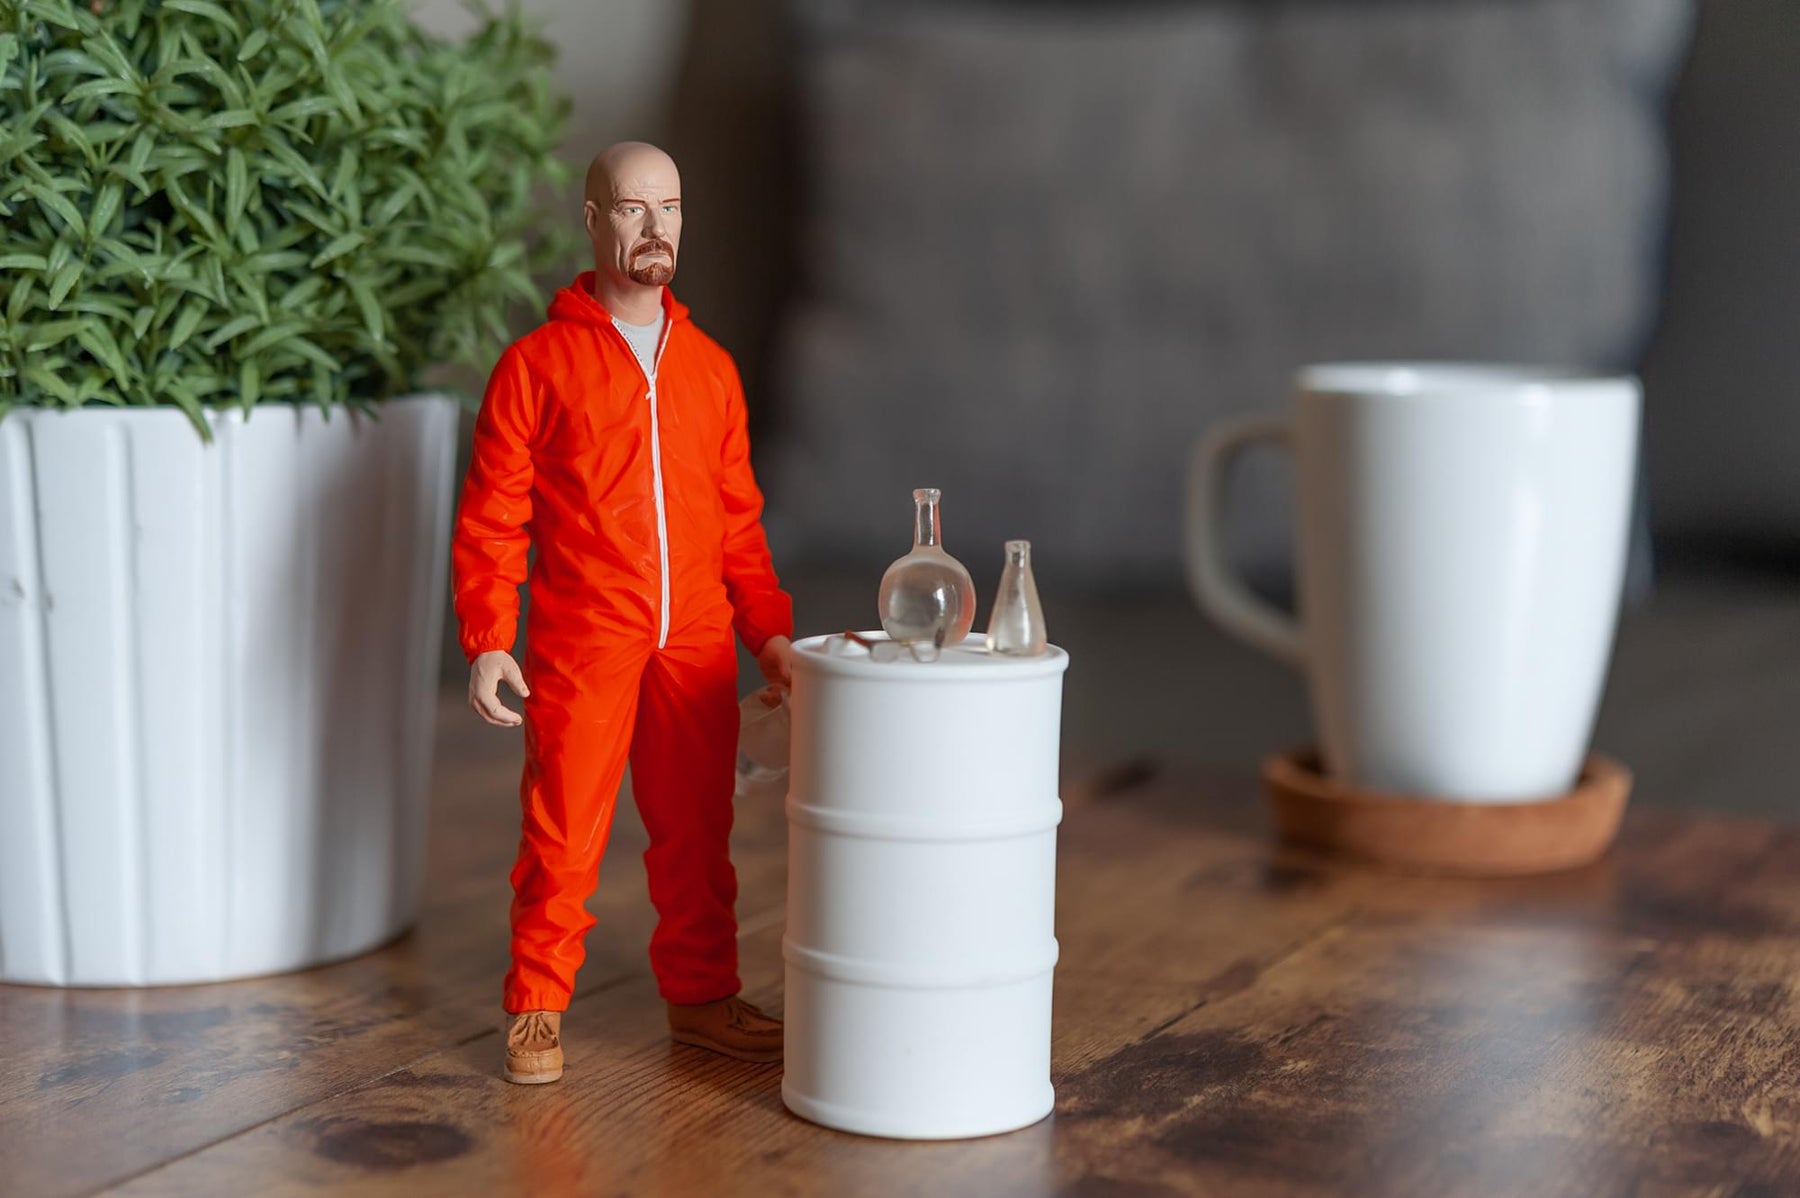 Breaking Bad Walter White In Orange Hazmat Suit Figure | Measures 6 Inches Tall